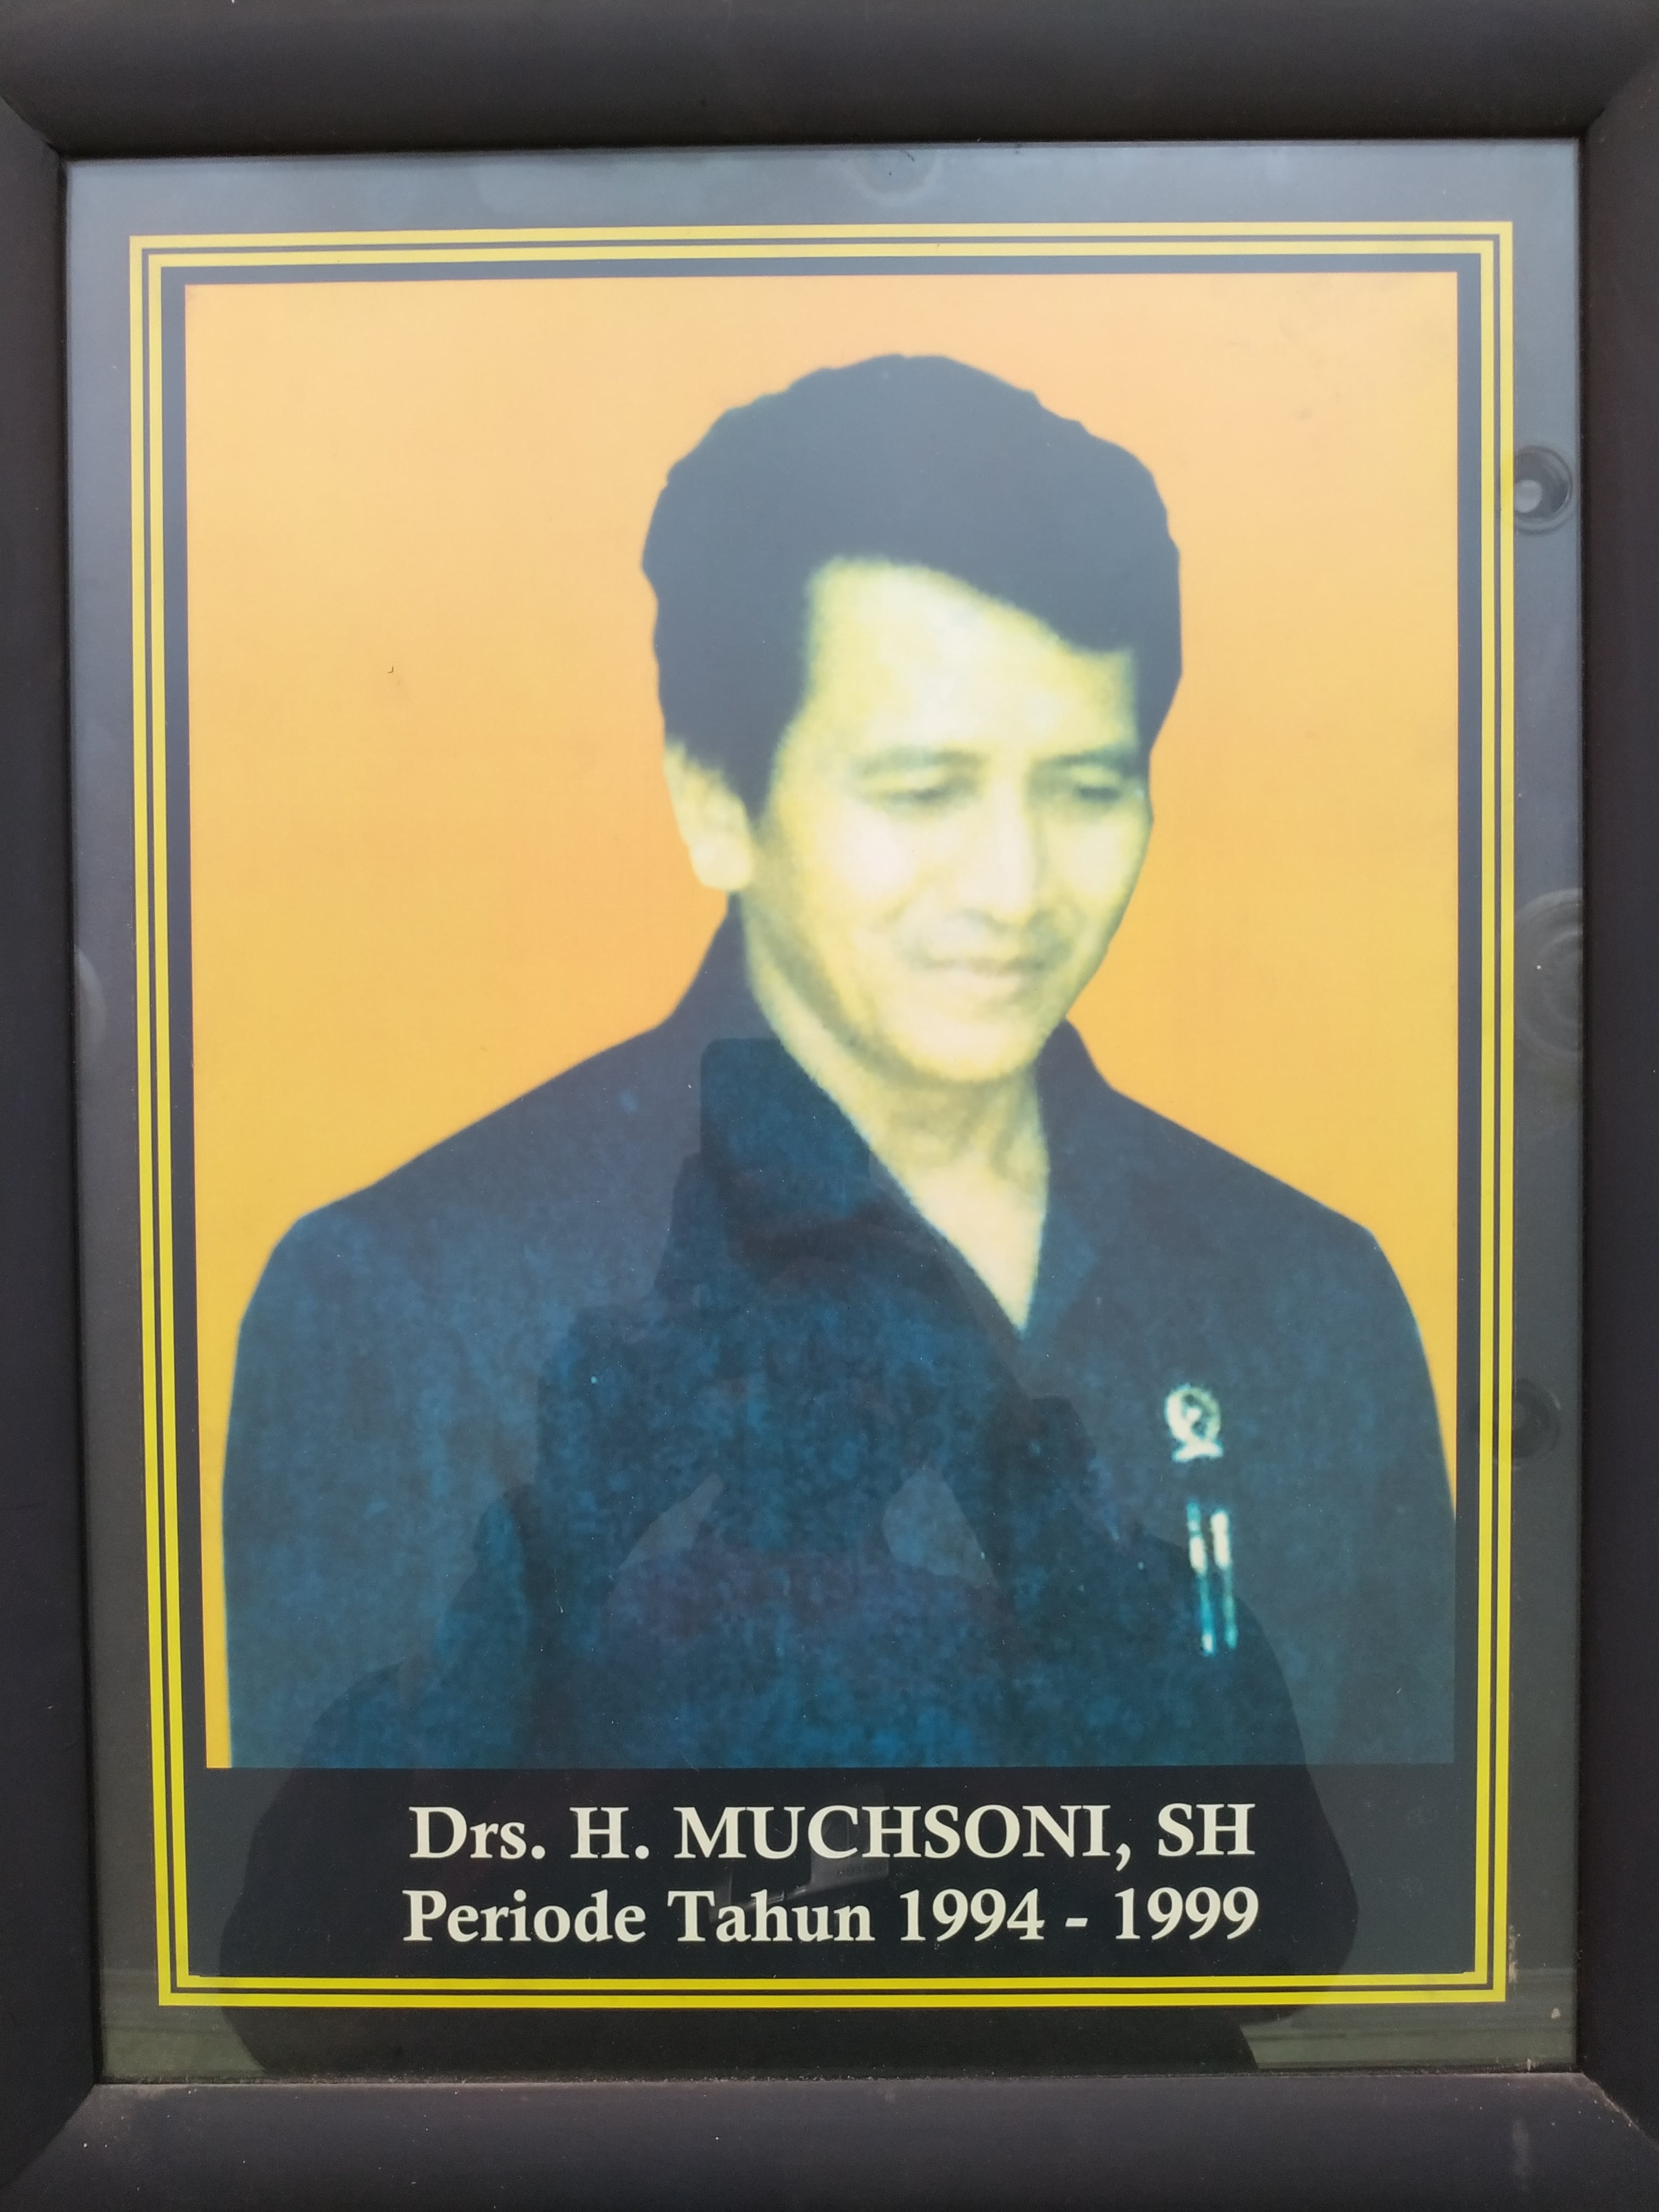 Mantan Ketua 1994 1999 Muchsoni